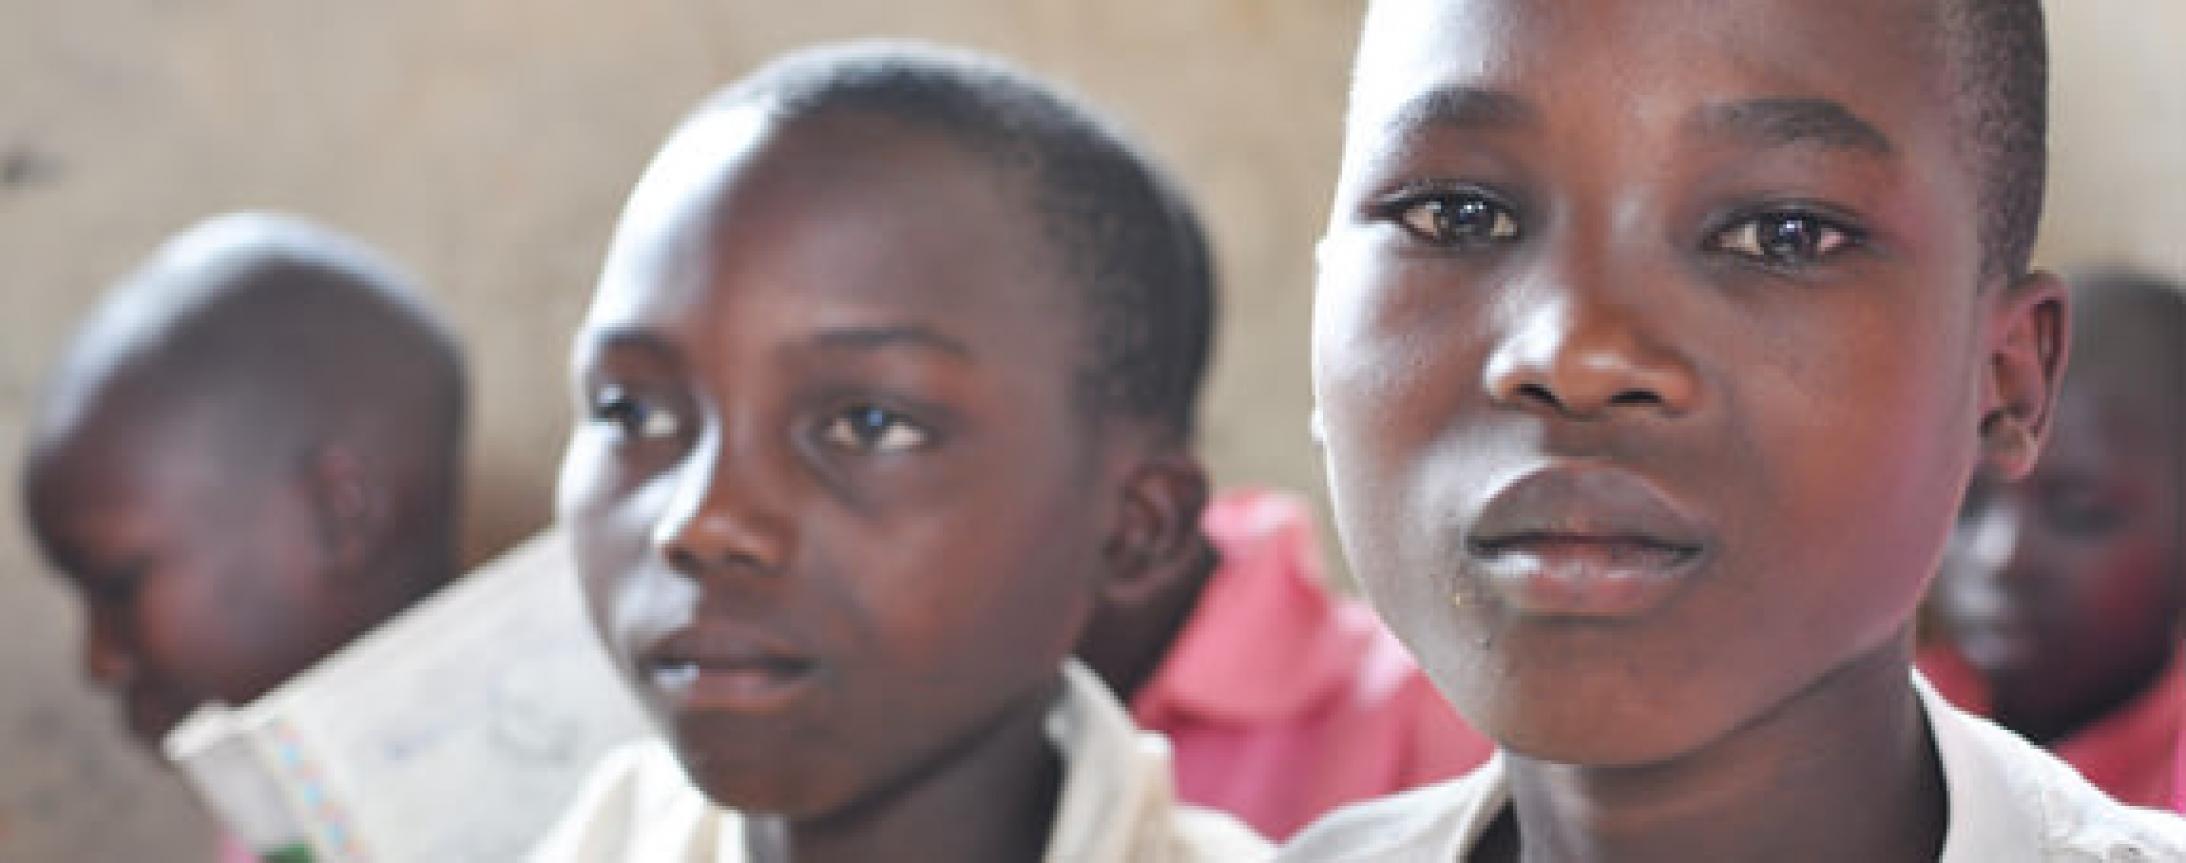 Bildung fÃ¼r alle: Schulkind in Uganda